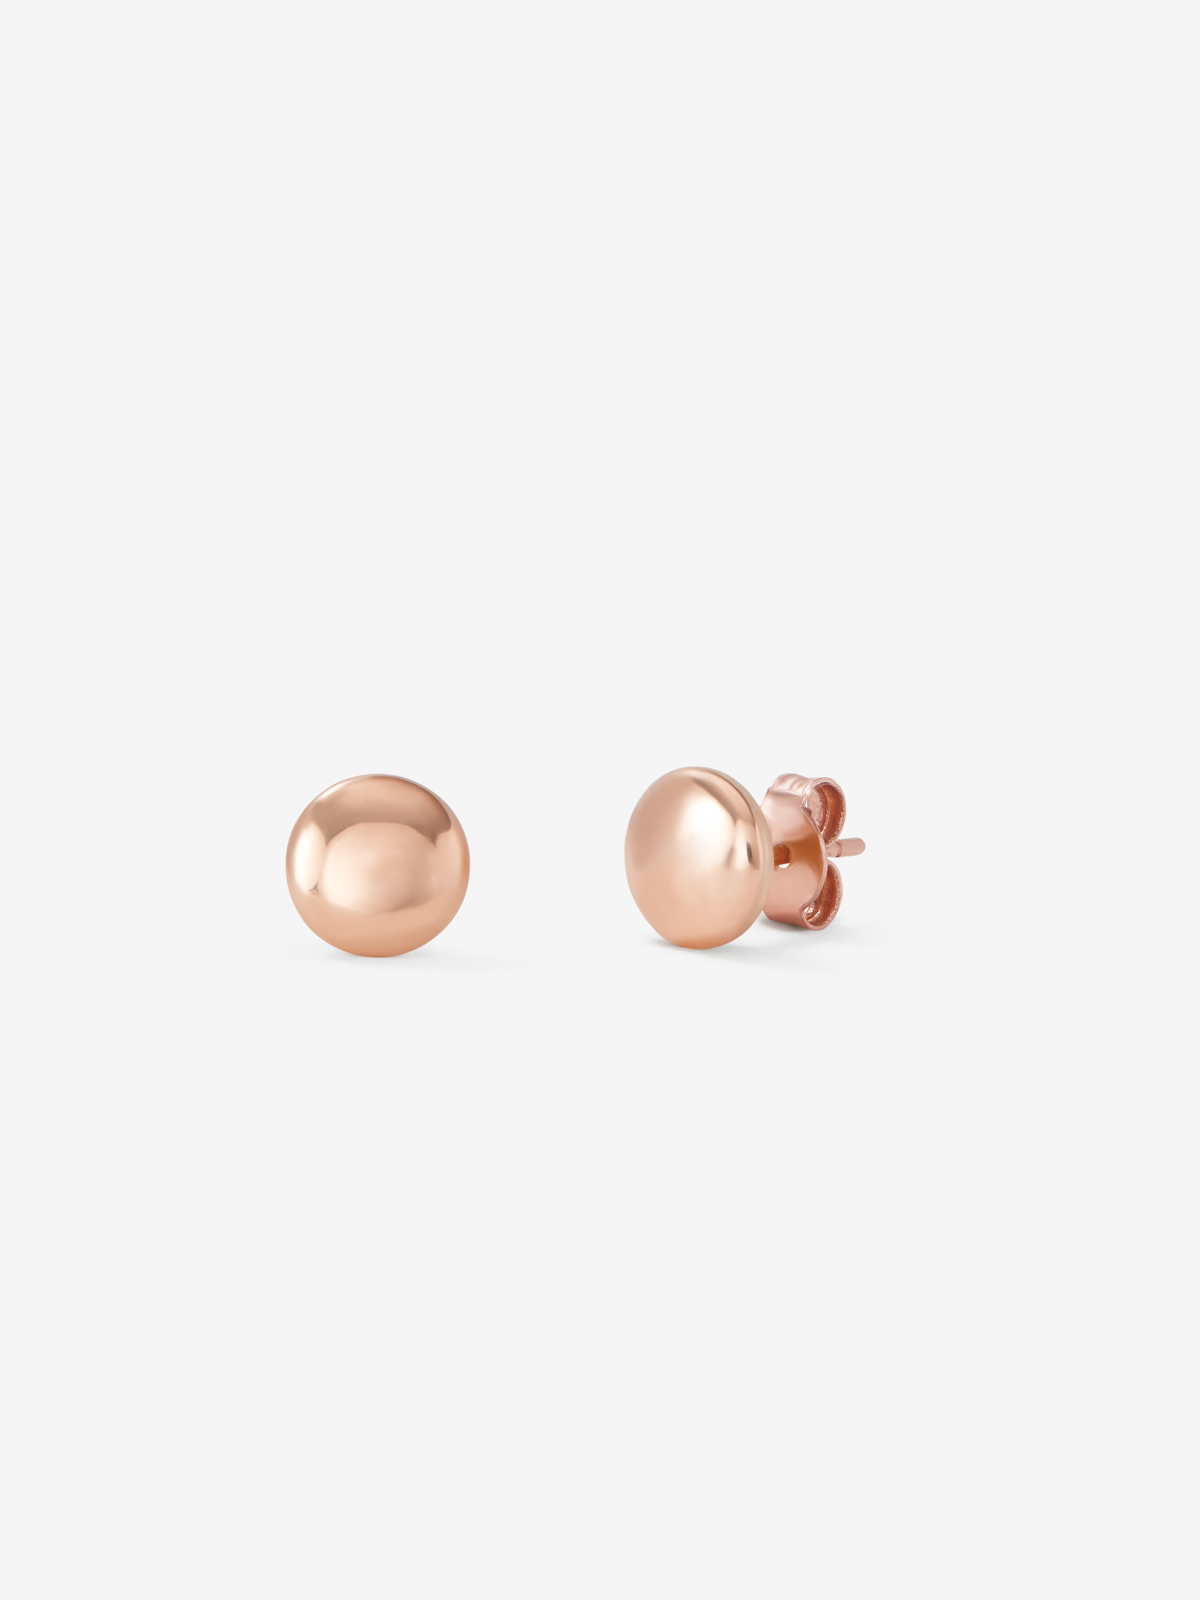 Medium-sized 18K rose gold button earrings.